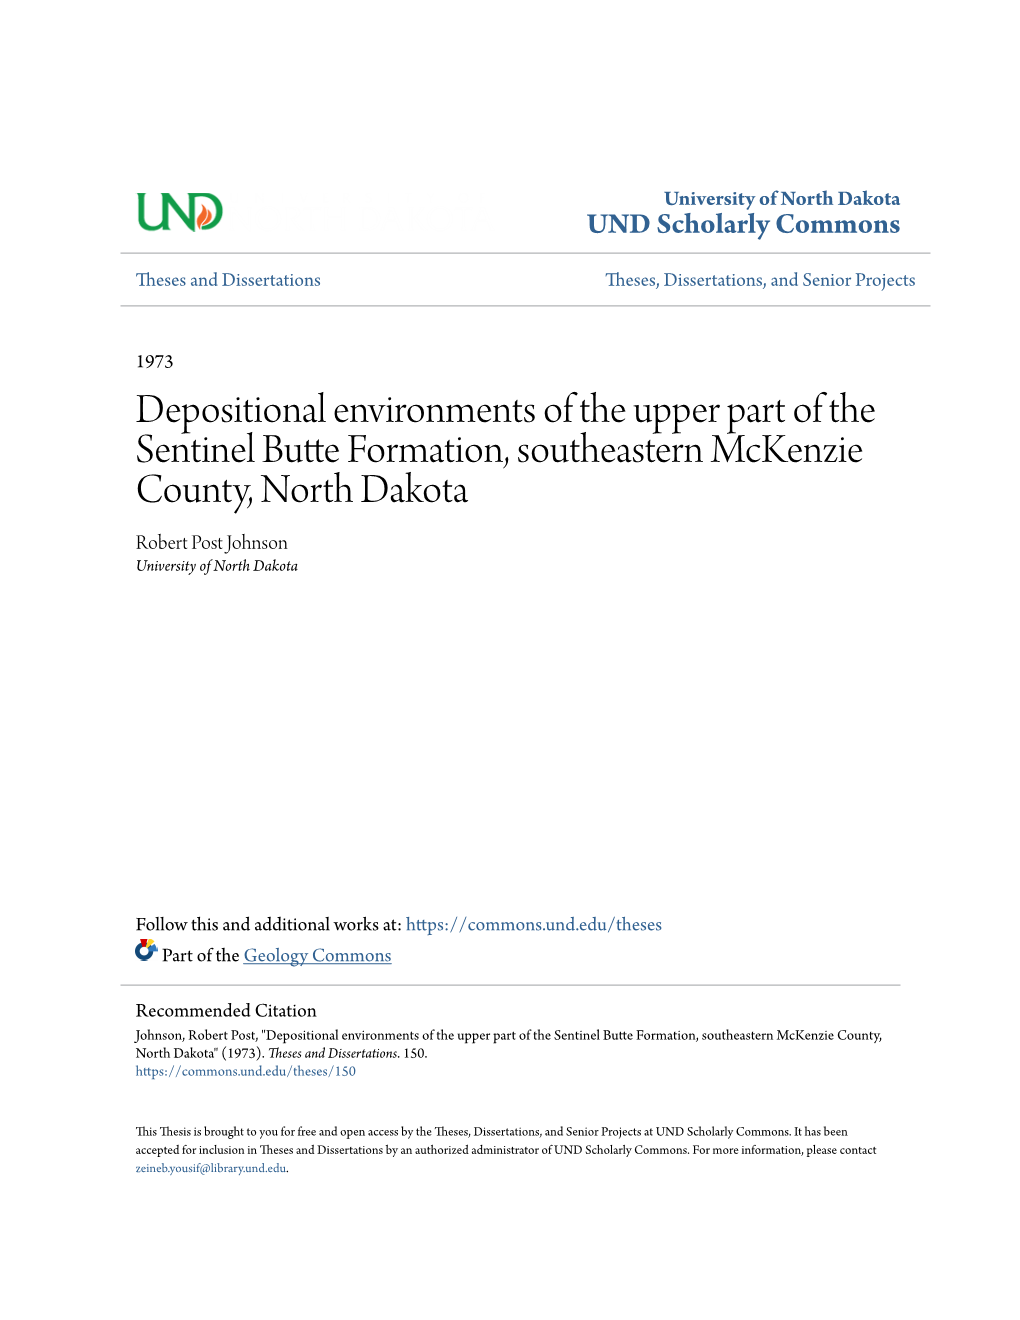 Depositional Environments of the Upper Part of the Sentinel Butte Formation, Southeastern Mckenzie County, North Dakota Robert Post Johnson University of North Dakota